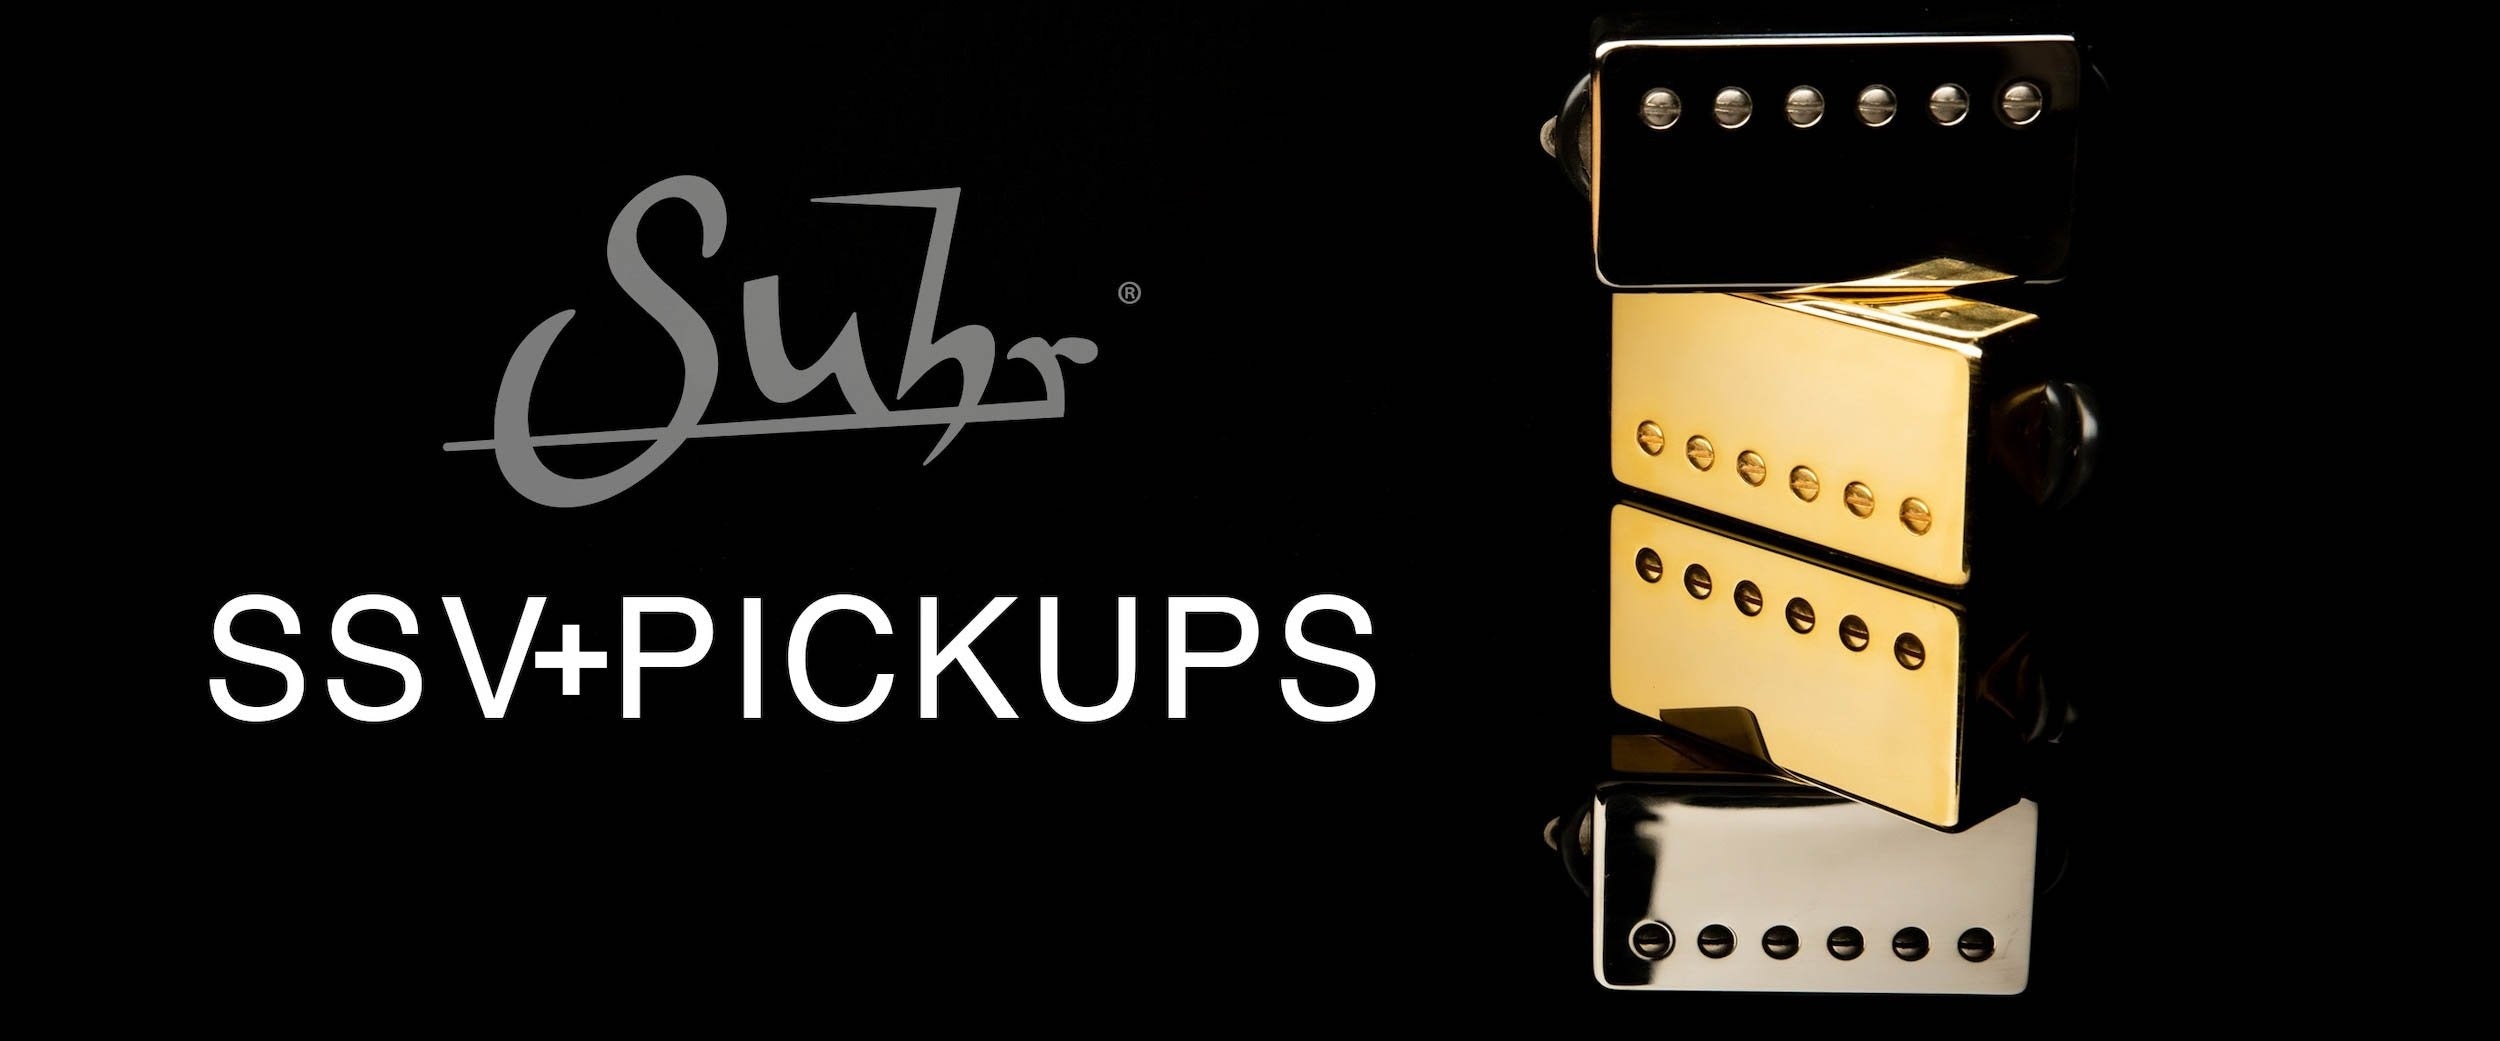 Suhr SSH Plus, Single Screw Hot Humbucker Pickup, Bridge - HIENDGUITAR   SUHR Pickup